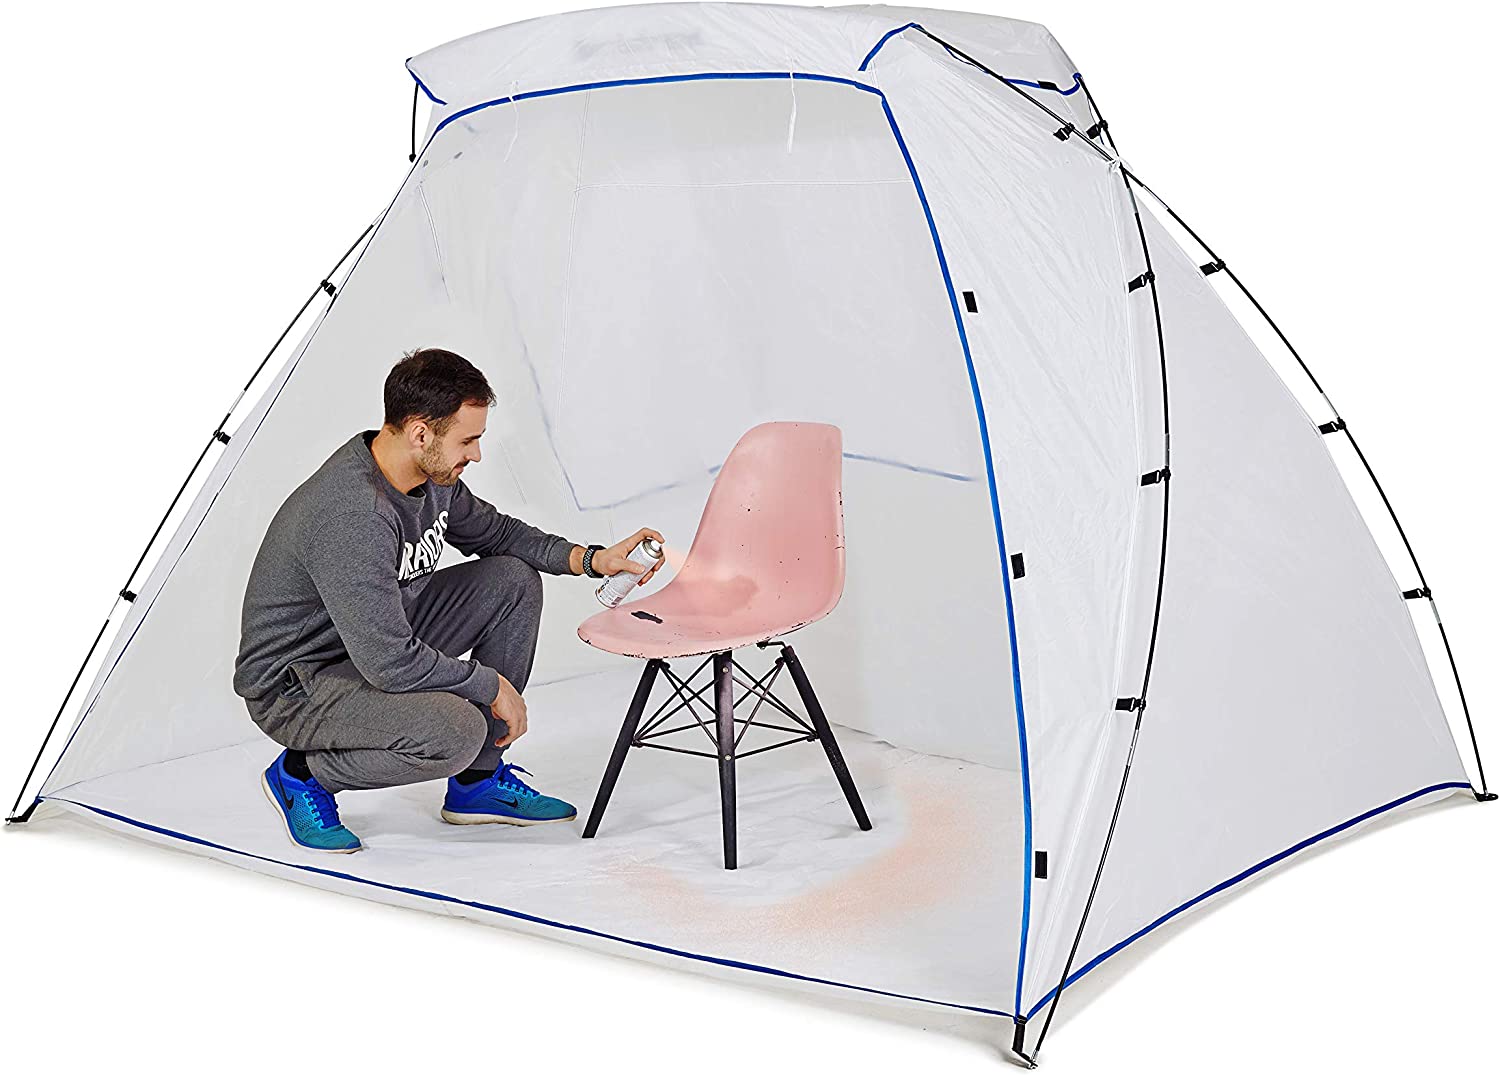 Airbrush Spray Paint Booth Shelter Tent Portable 8.5x6ft – kowanii